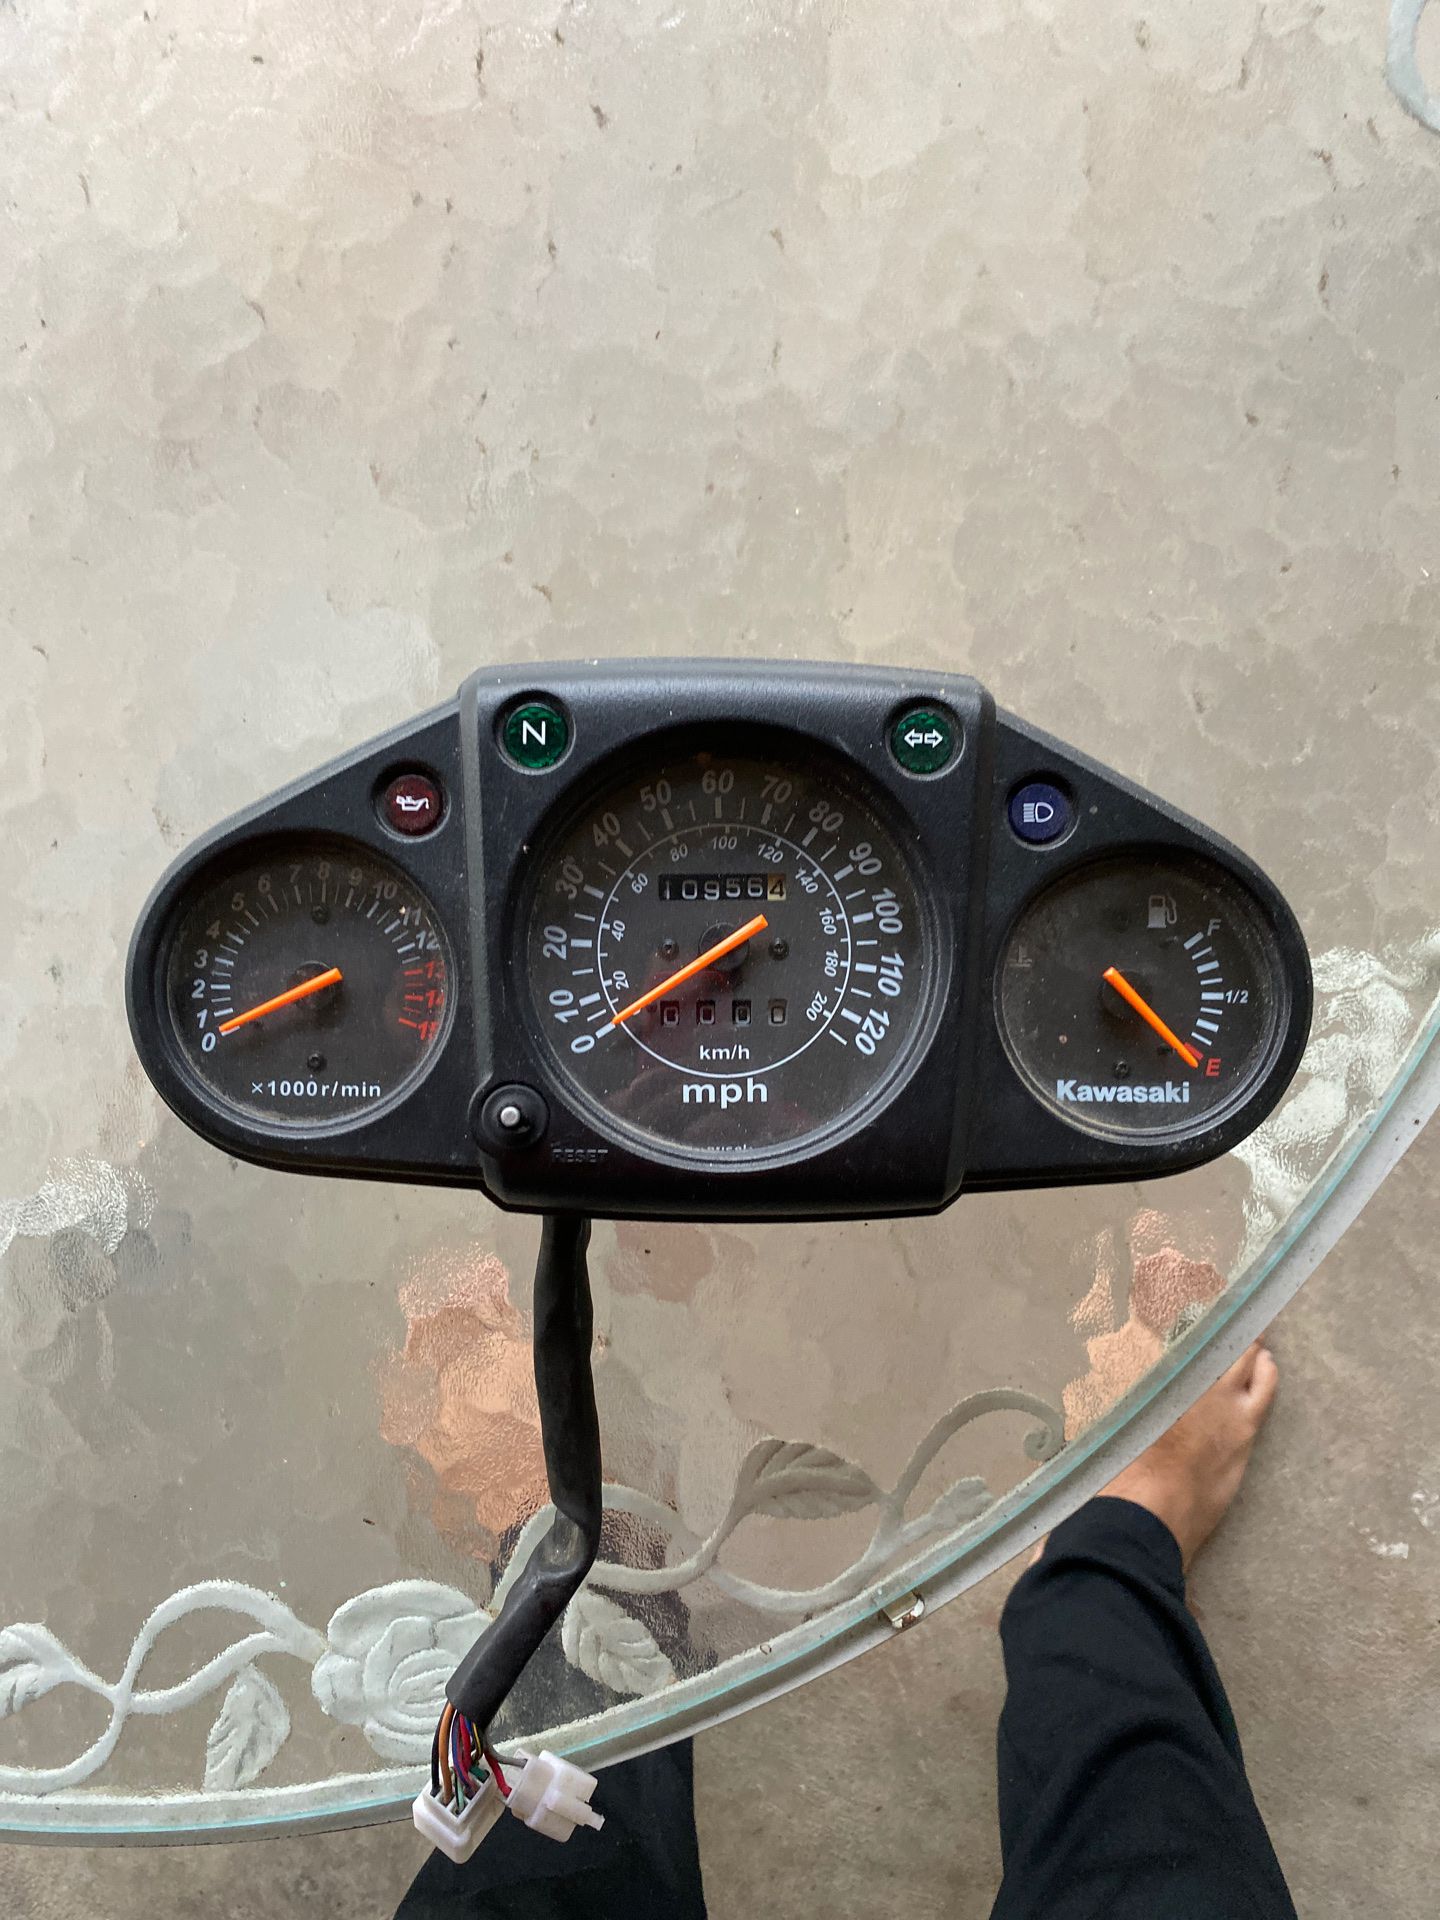 2012 Kawasaki ninja analog speedometer